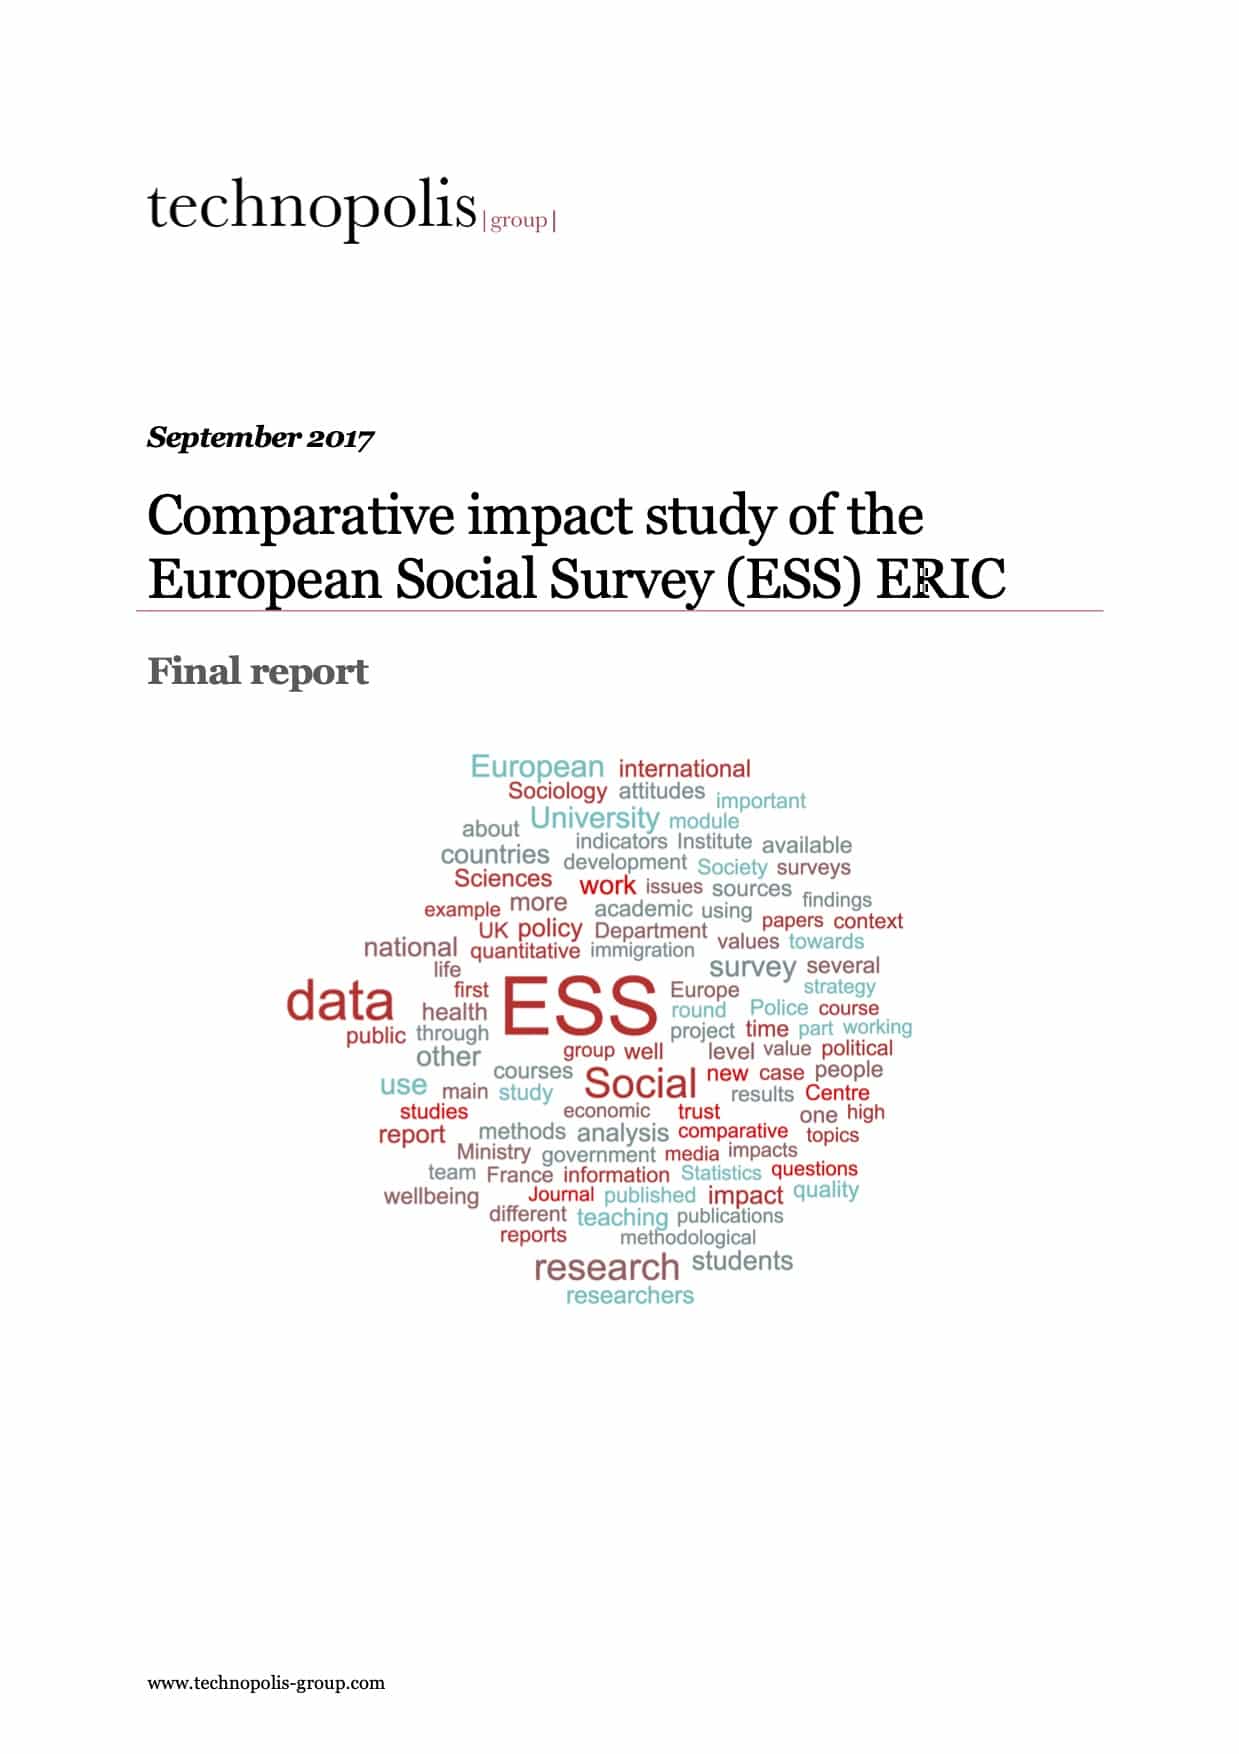 Comparative impact study of the European Social Survey (ESS) ERIC